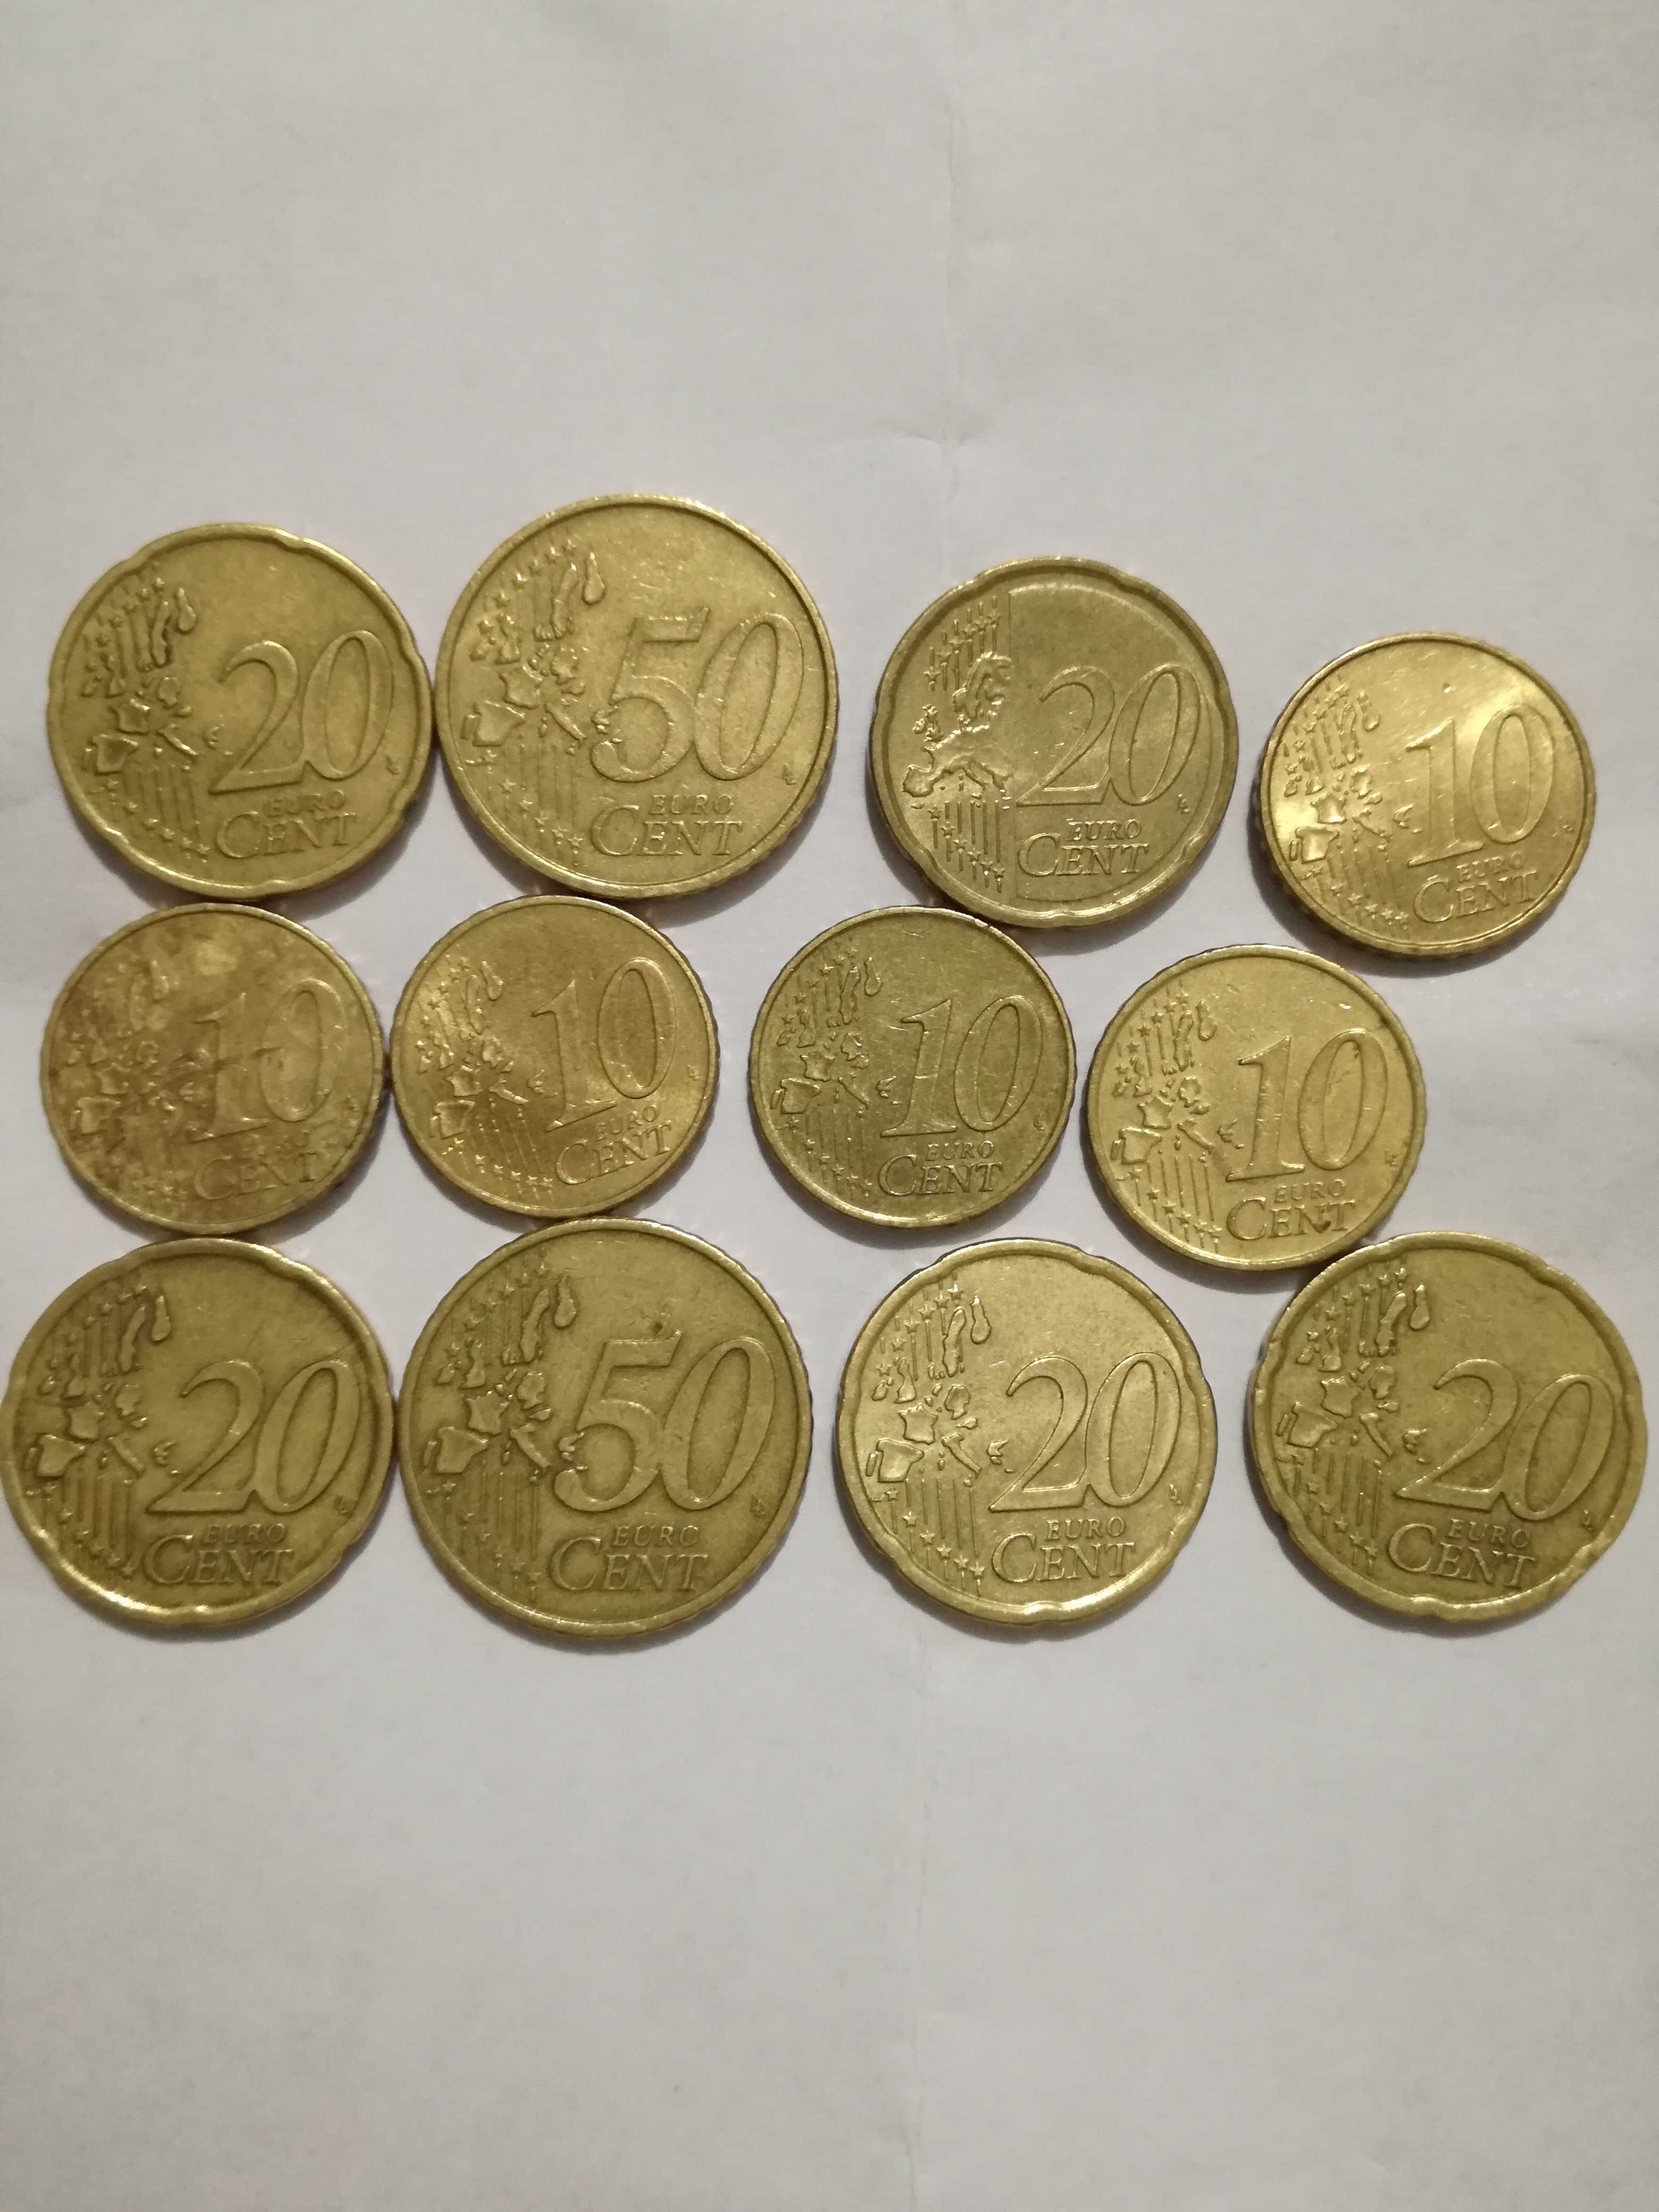 Vand monede rare euro centi Germania anul 2002